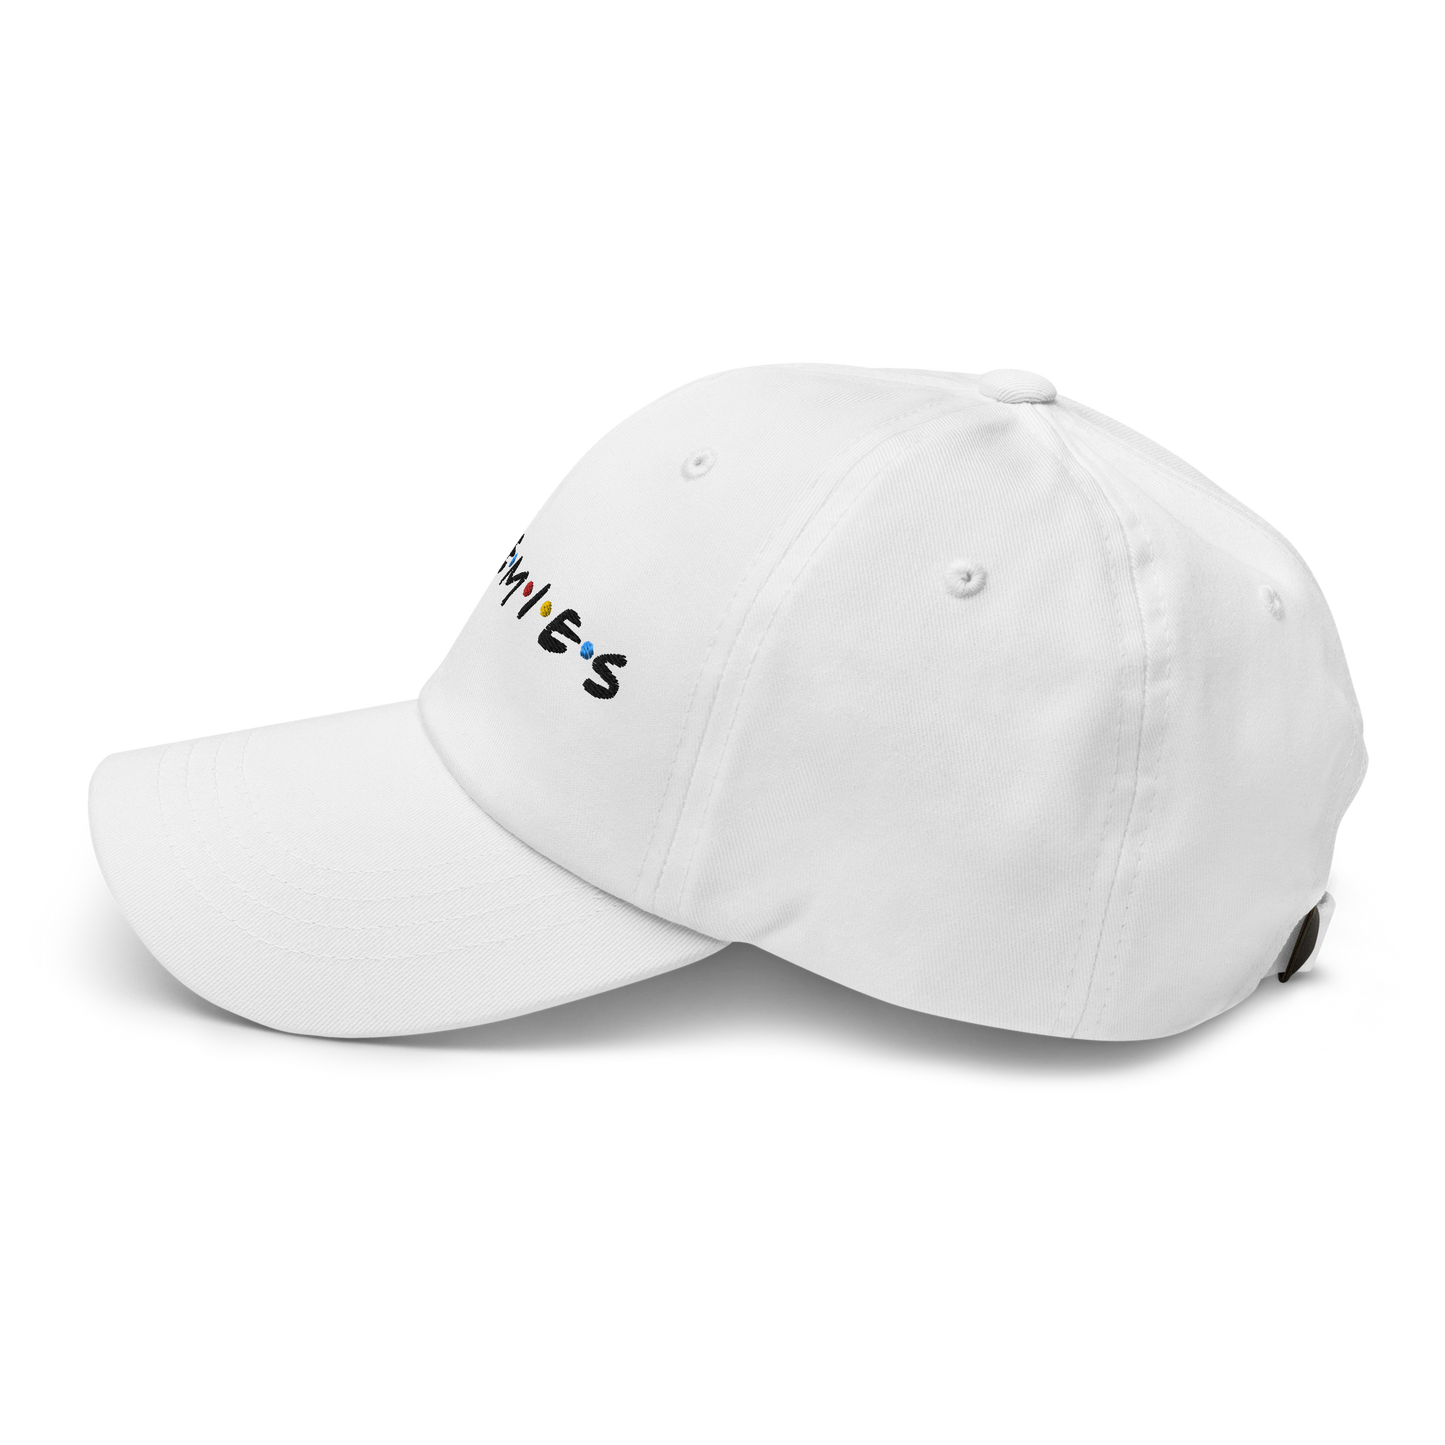 ENEMIES WHITE BASEBALL CAP